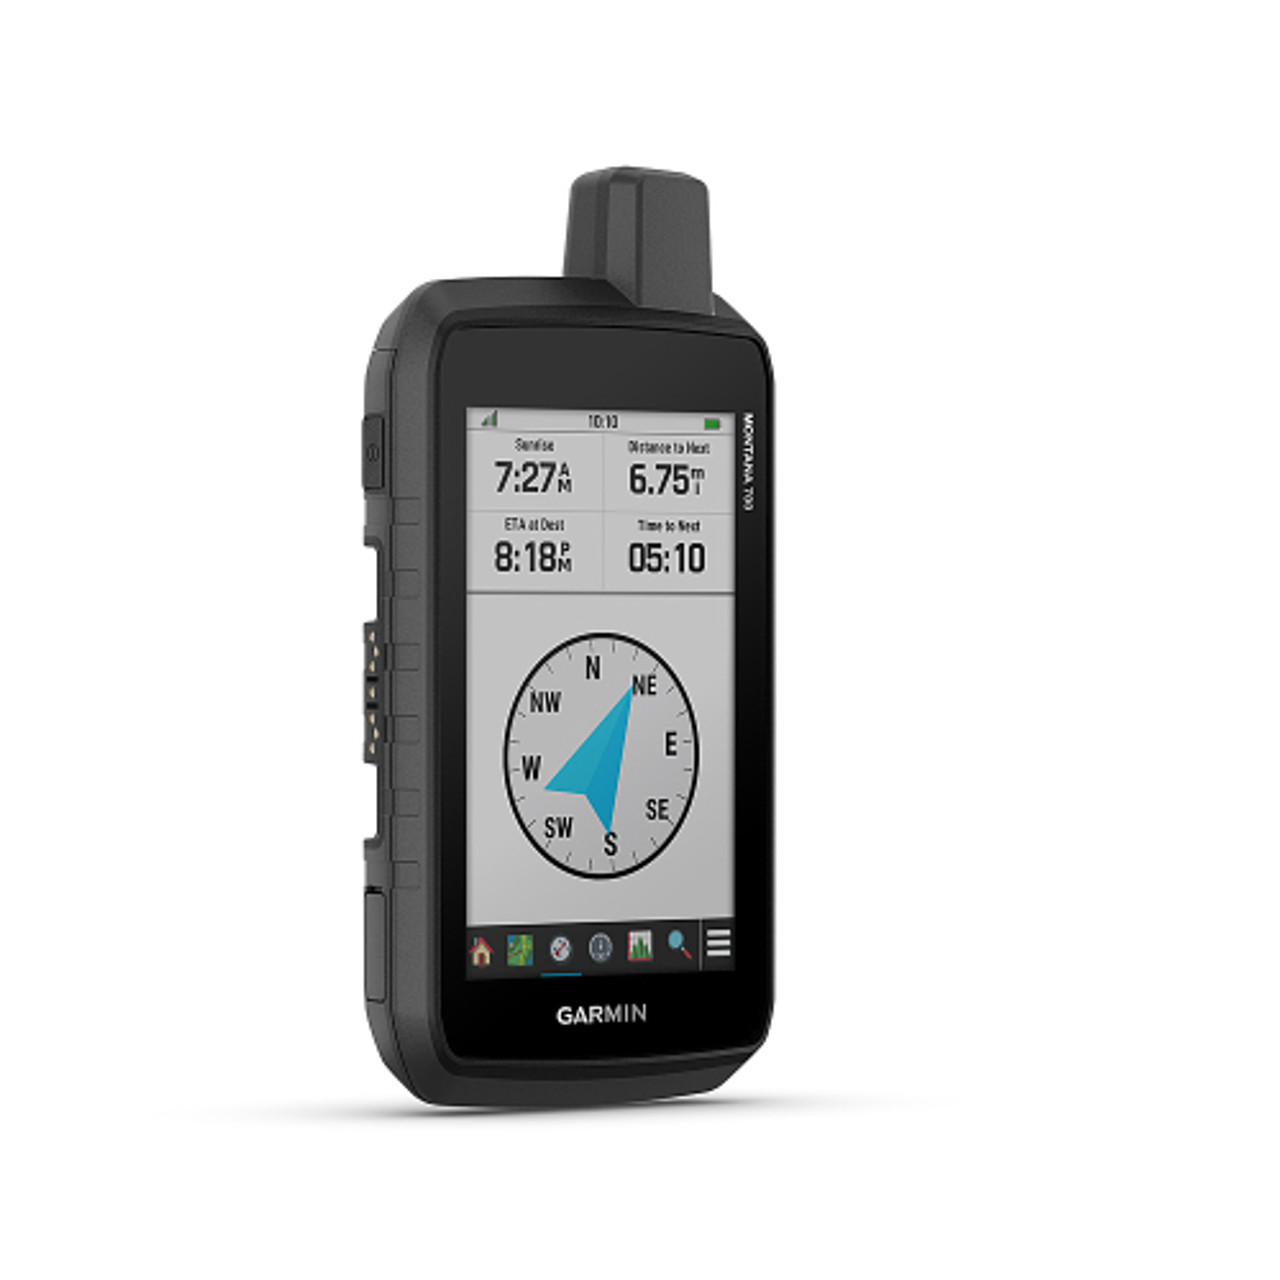 Garmin - Montana 700 5" GPS with Built-in Bluetooth - Black